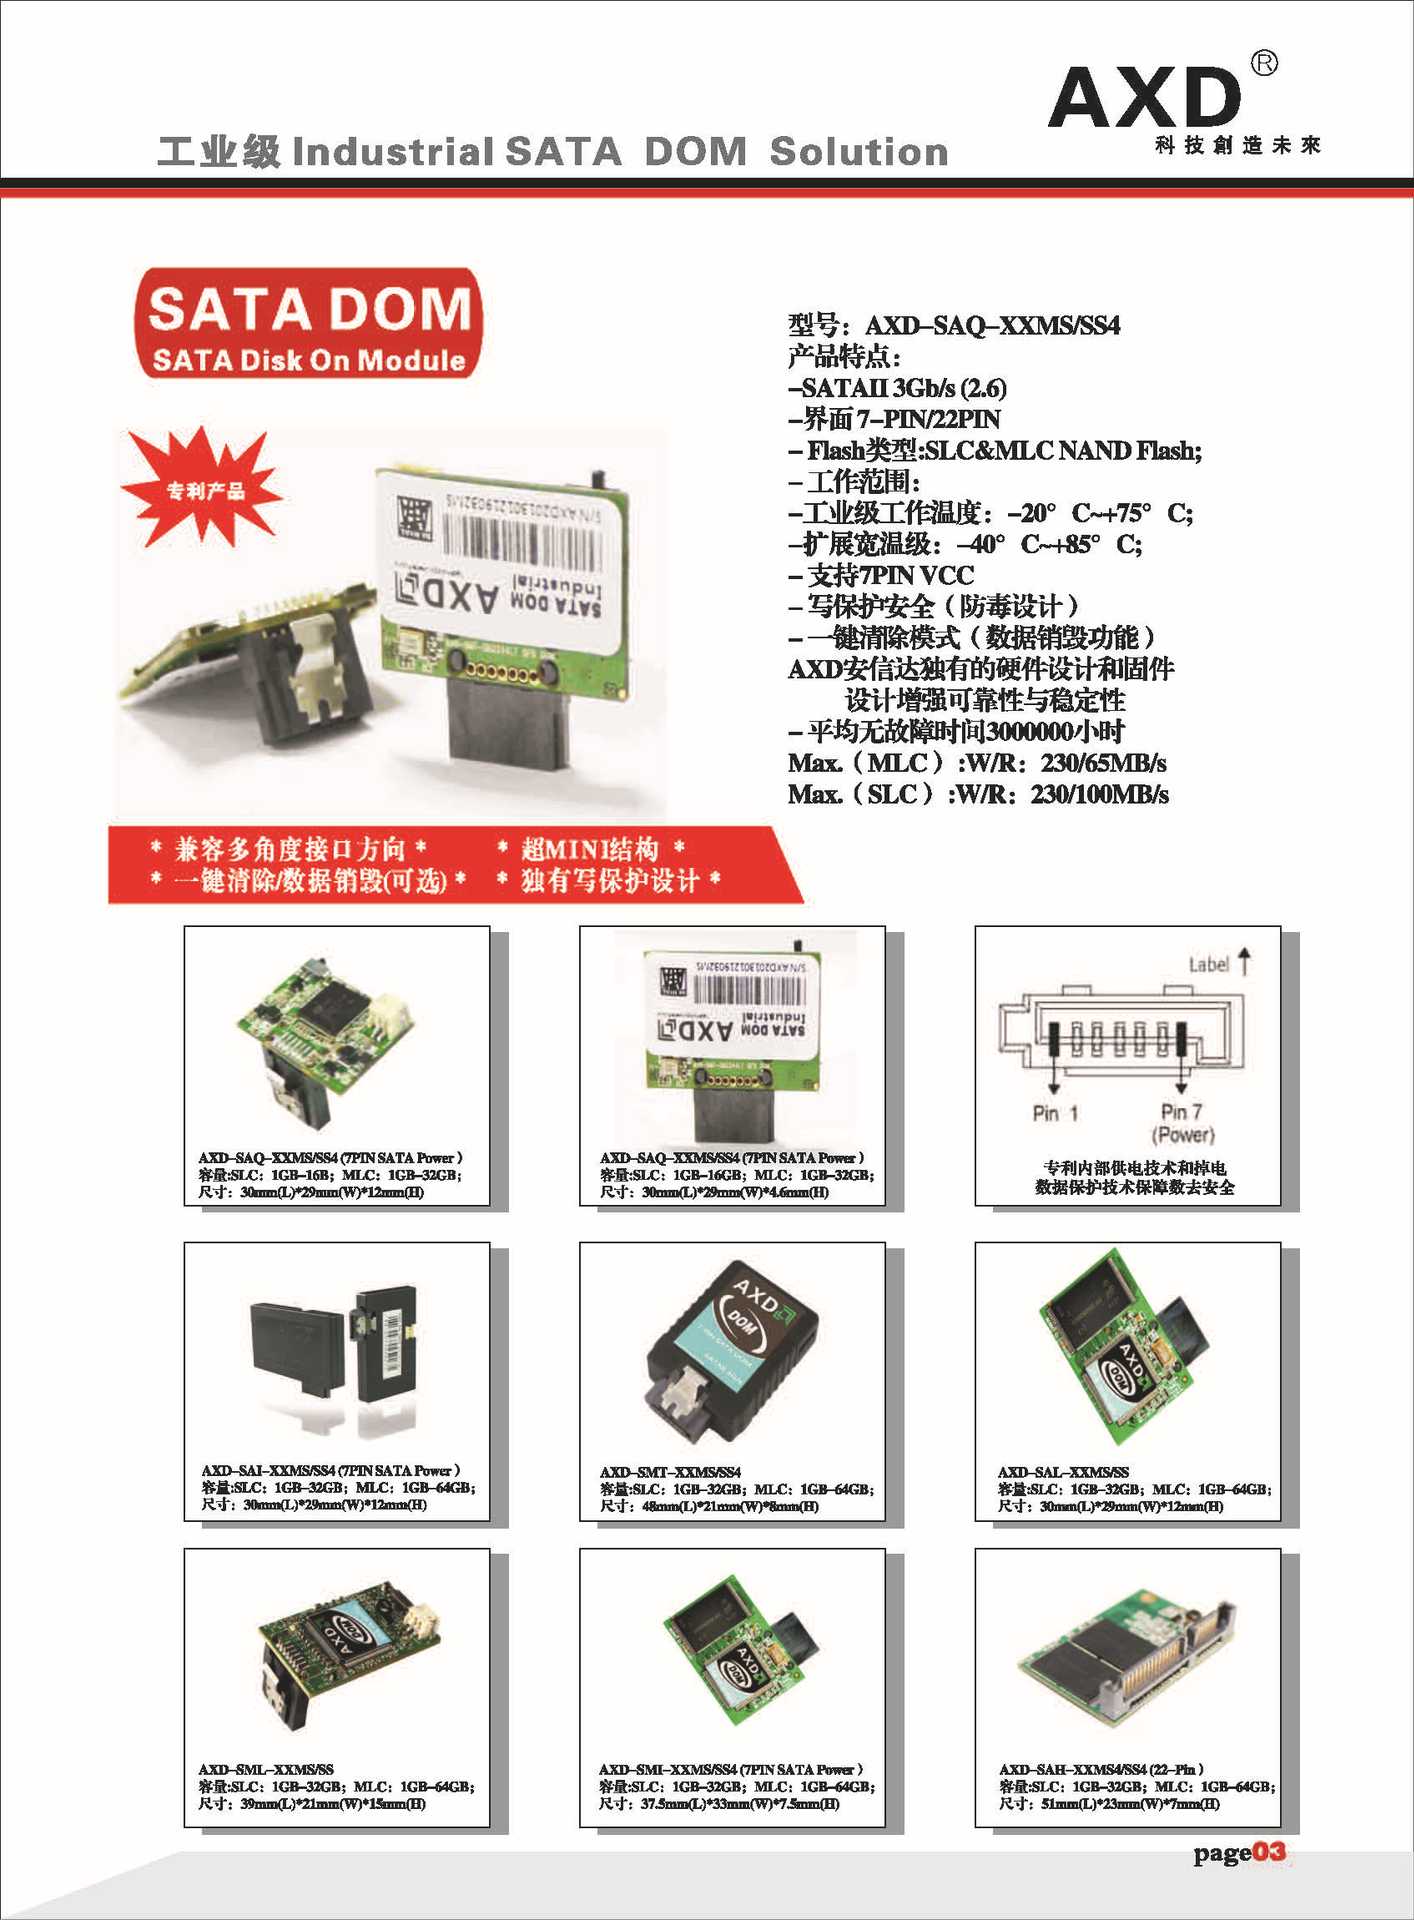 AXDSSD全球最小7PIN 直接供电SATA电子盘AXD-SAQ （MLC系列） SATA DOM电子盘,7-pin供电电子硬盘,7-pin SATA DOM电子硬盘,工业级SATA DOM电子硬盘,DOM电子硬盘